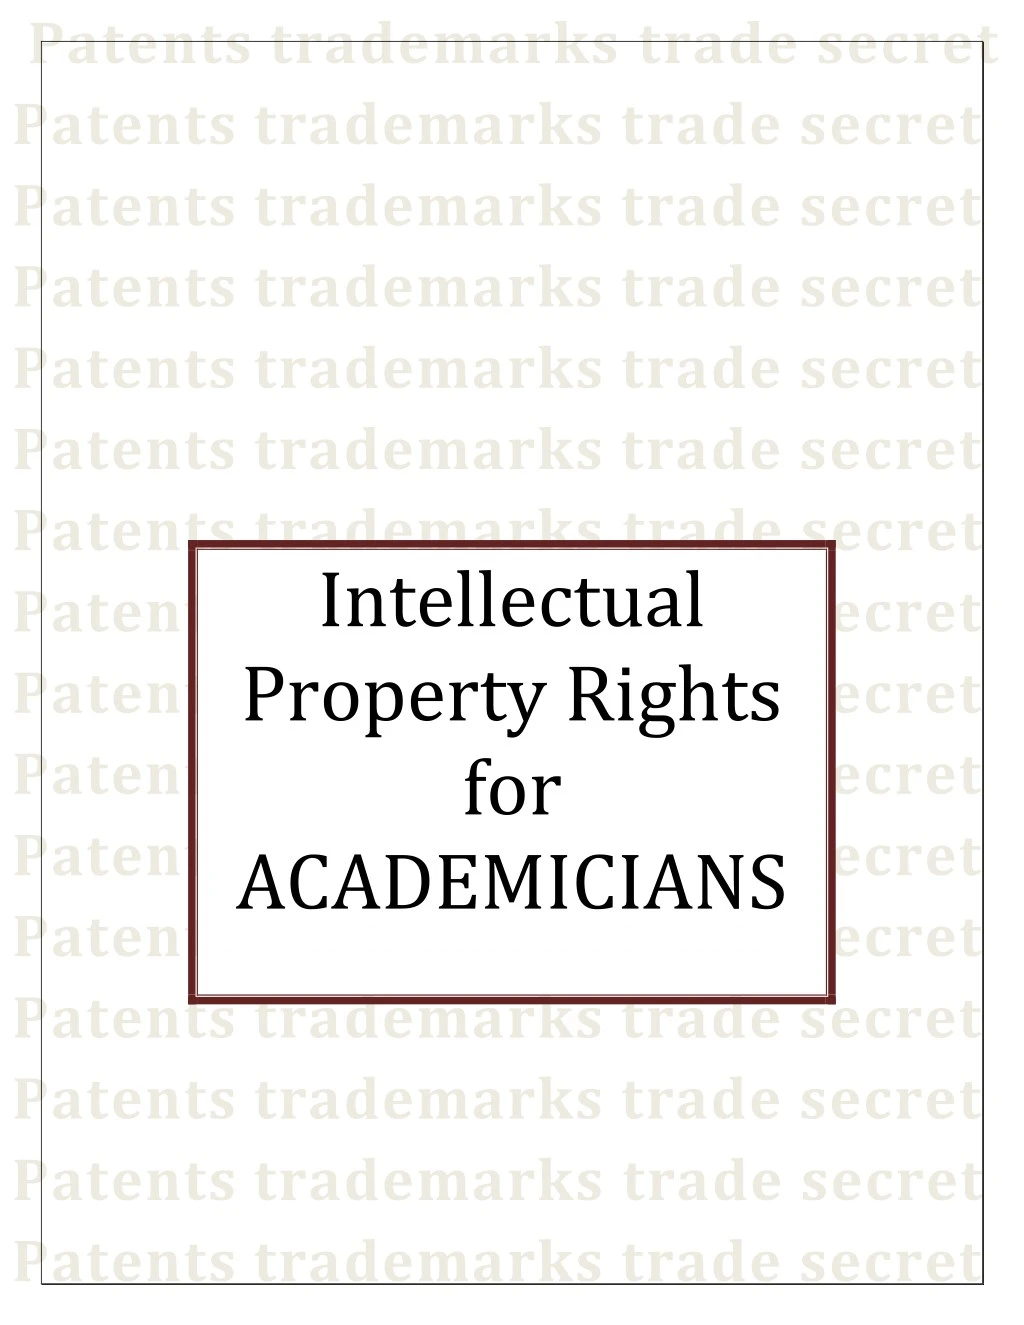 patents trademarks trade secret patents